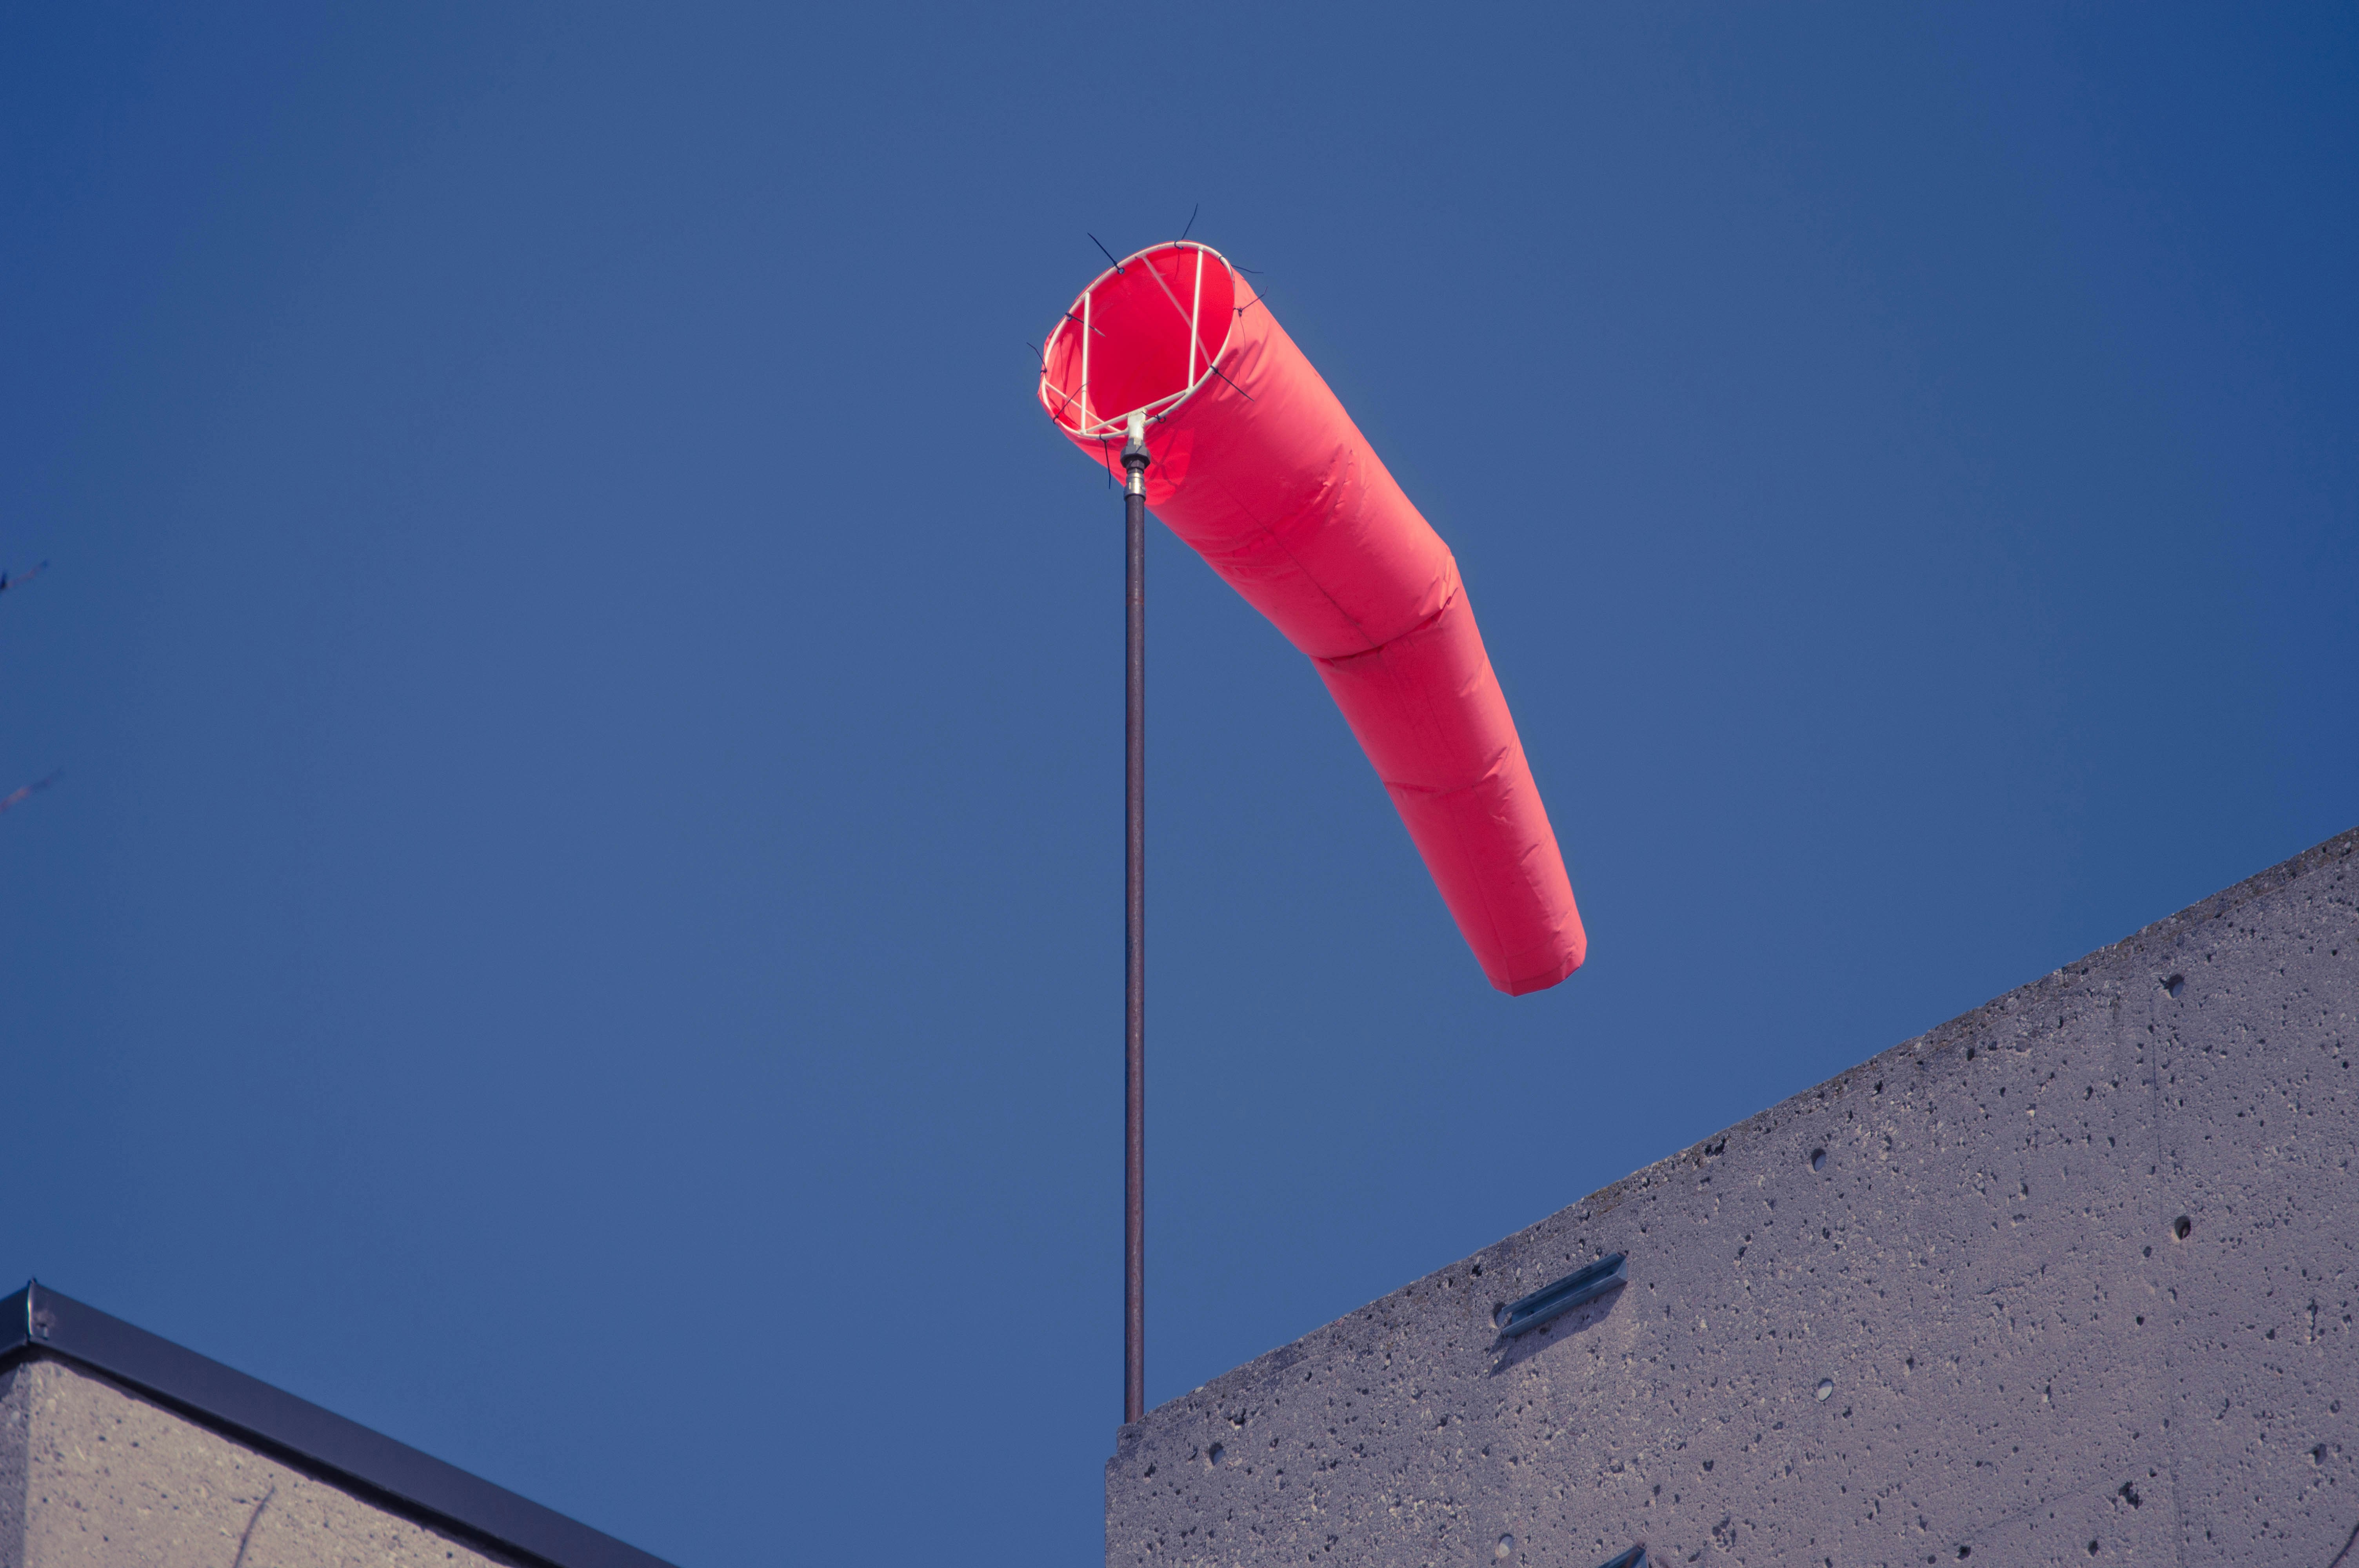 red paper lantern under blue sky during daytime